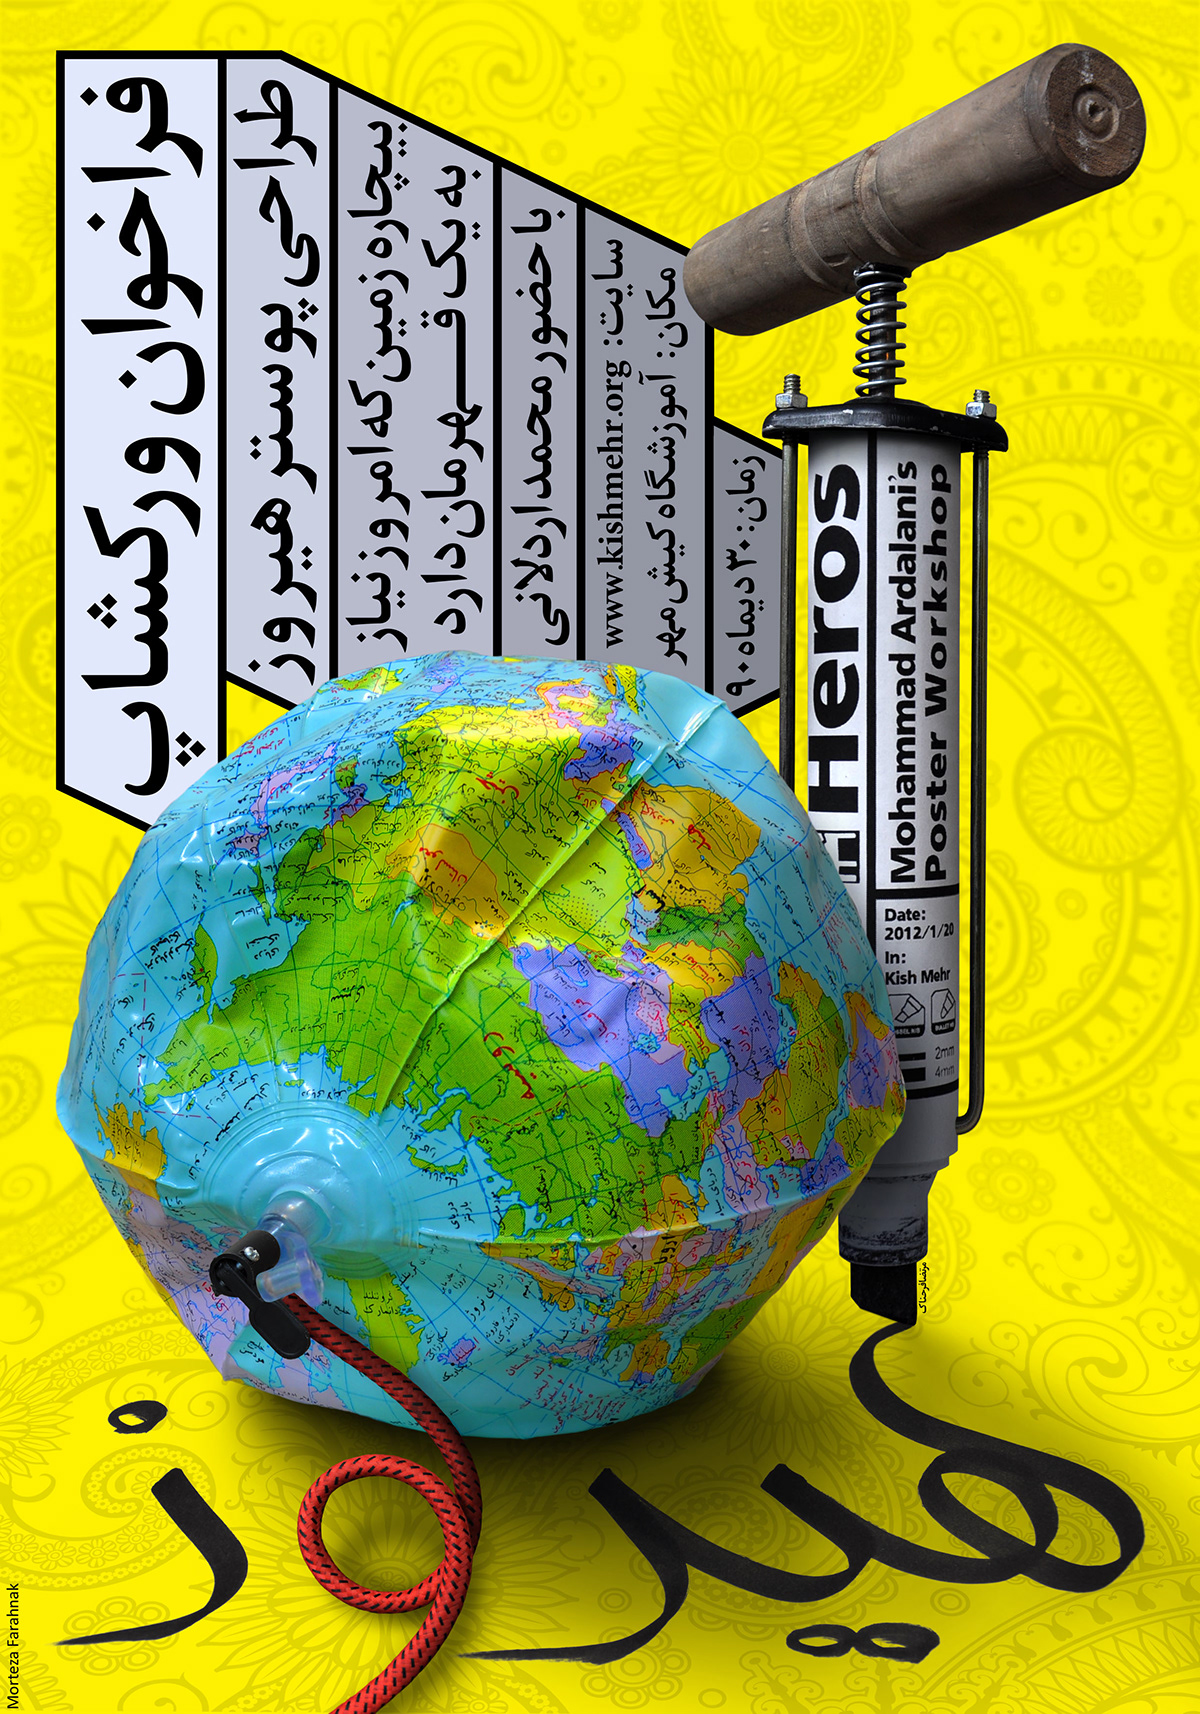 poster hussain design Workshop ecologic pollution Human rights Iran God